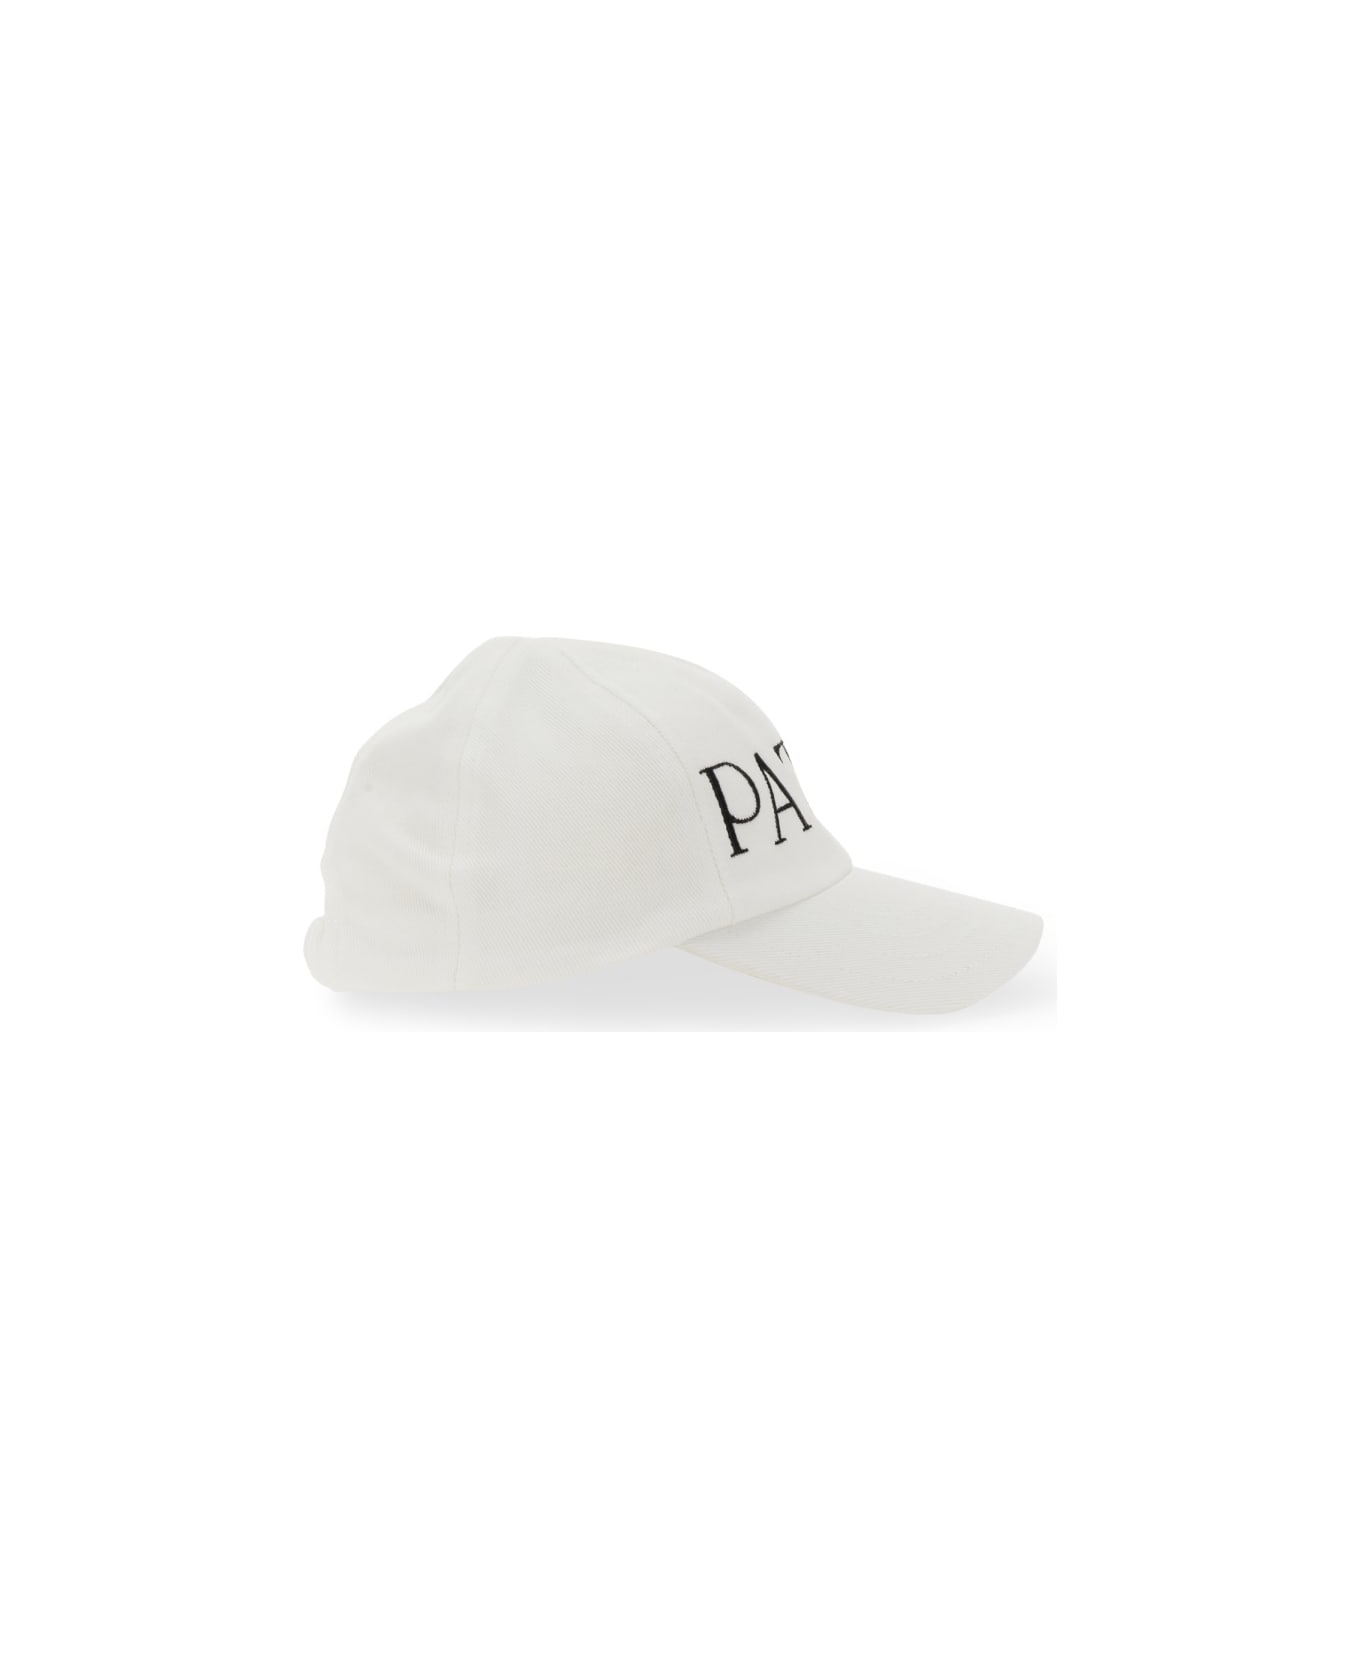 Patou Baseball Hat With Logo - WHITE